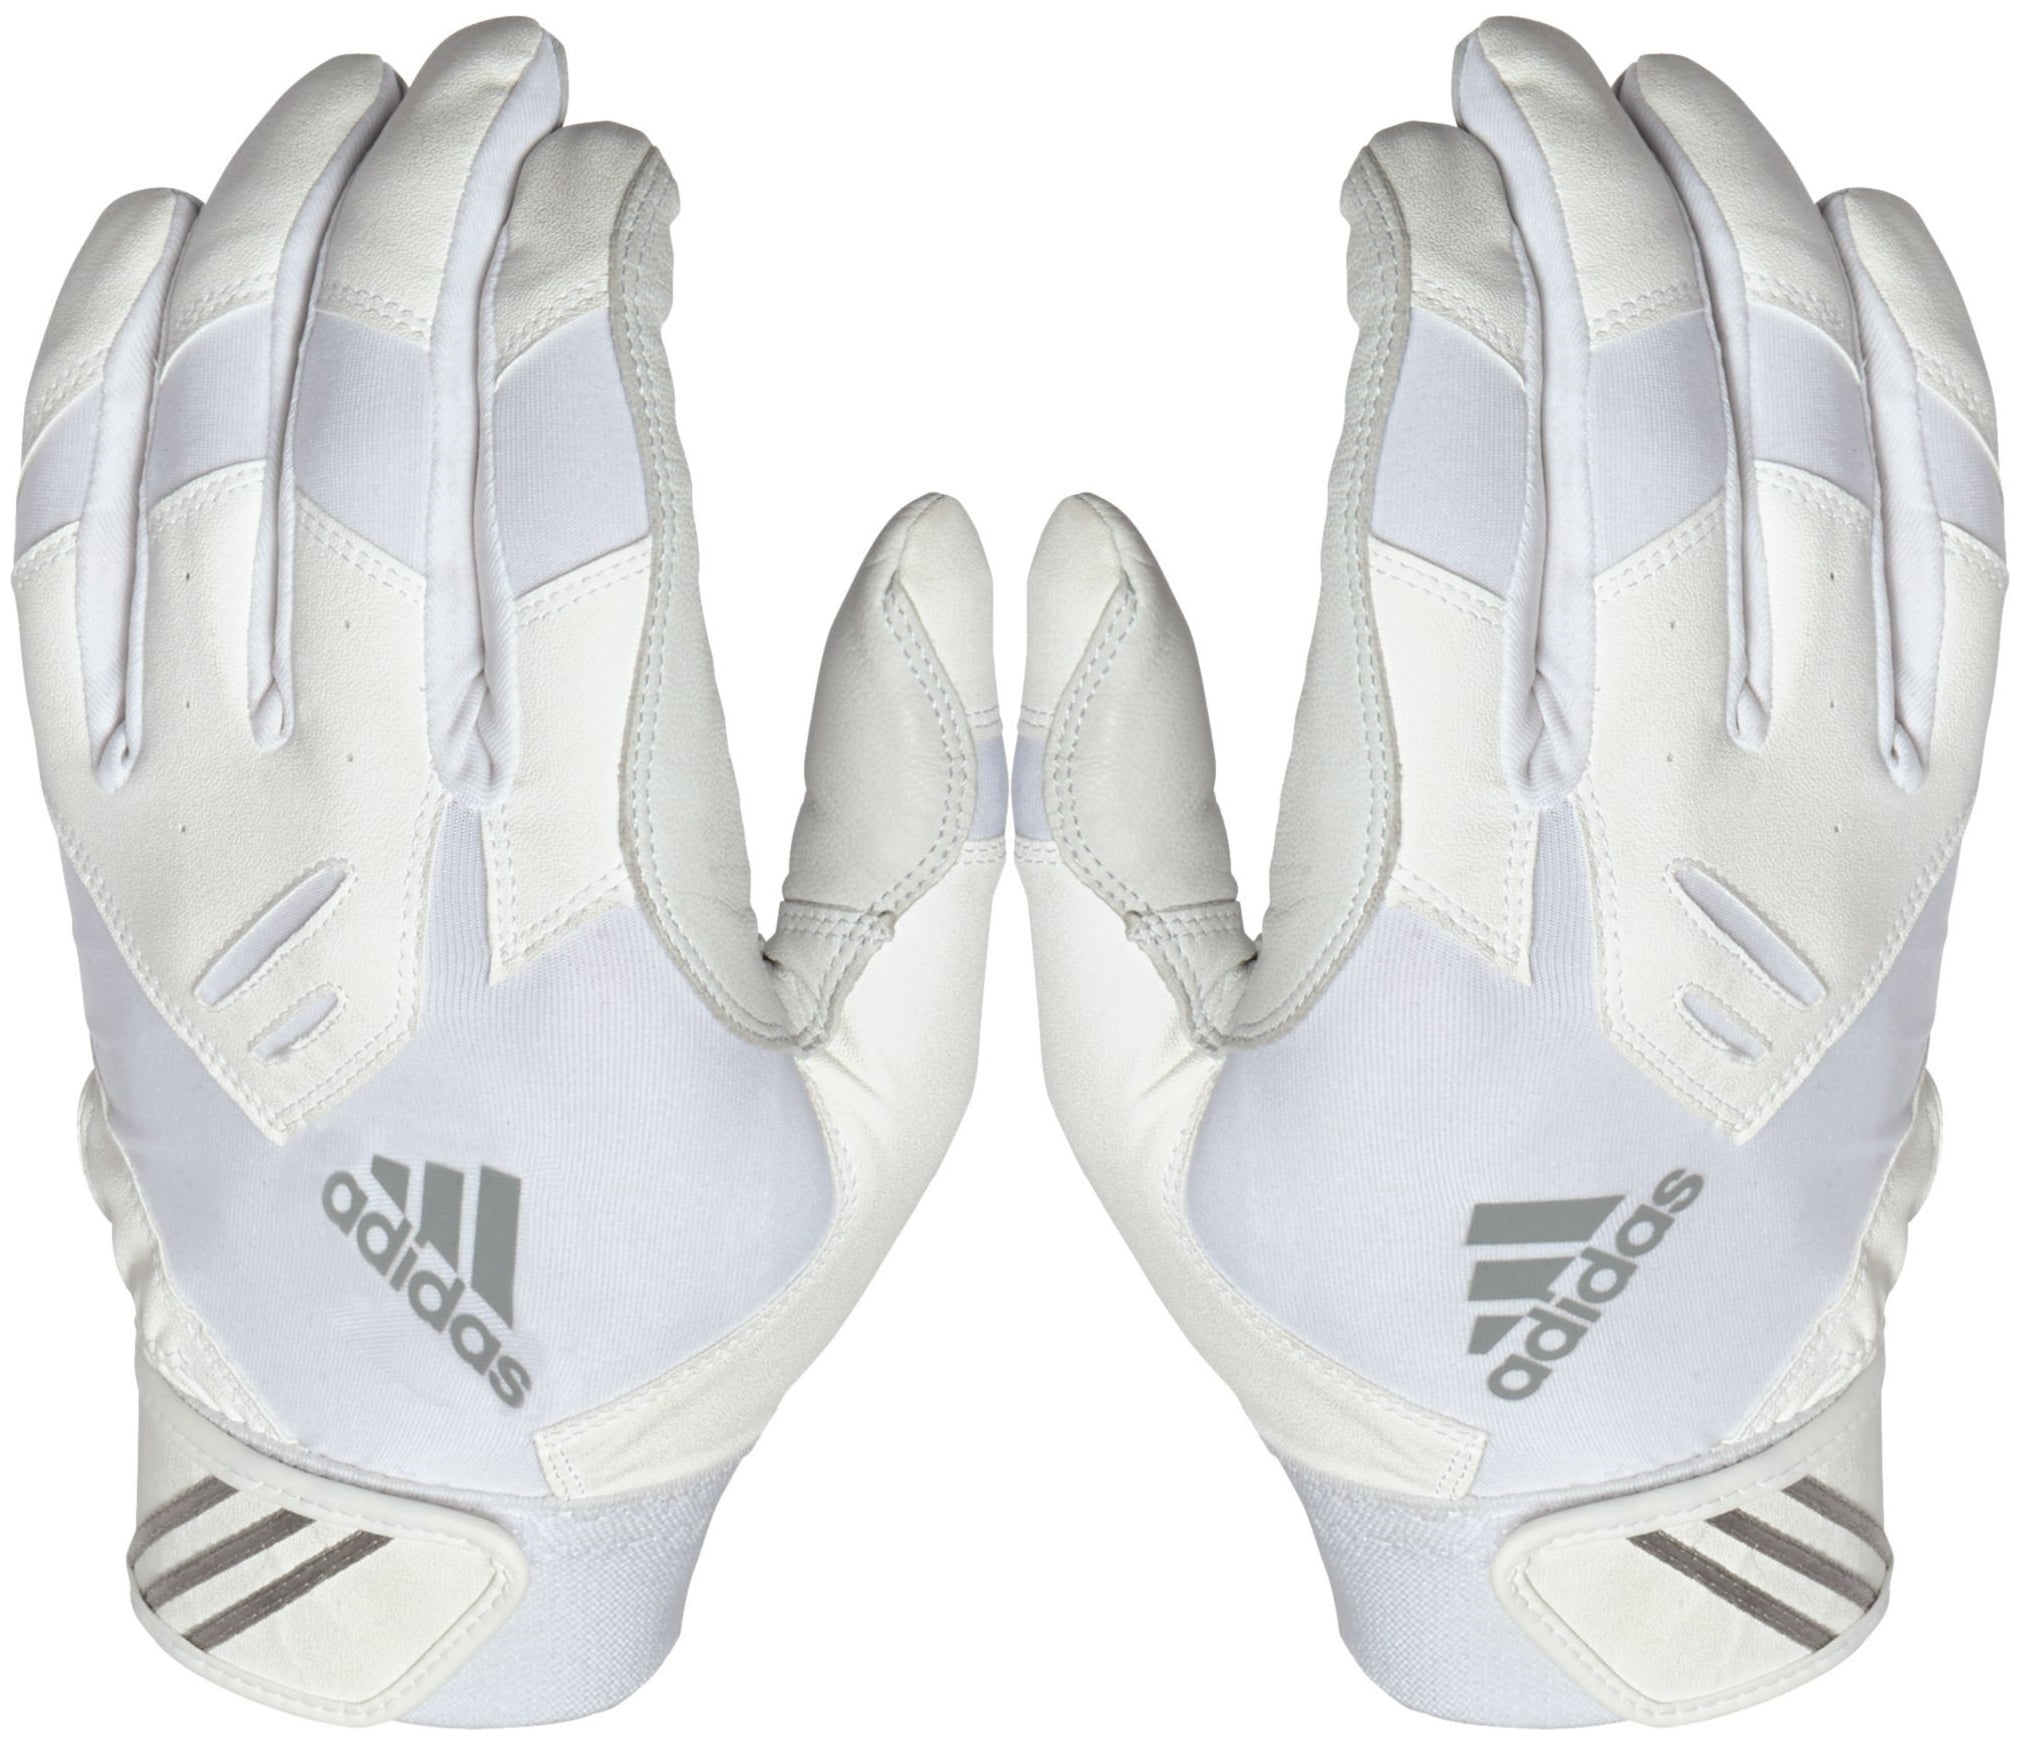 adidas trilogy batting gloves